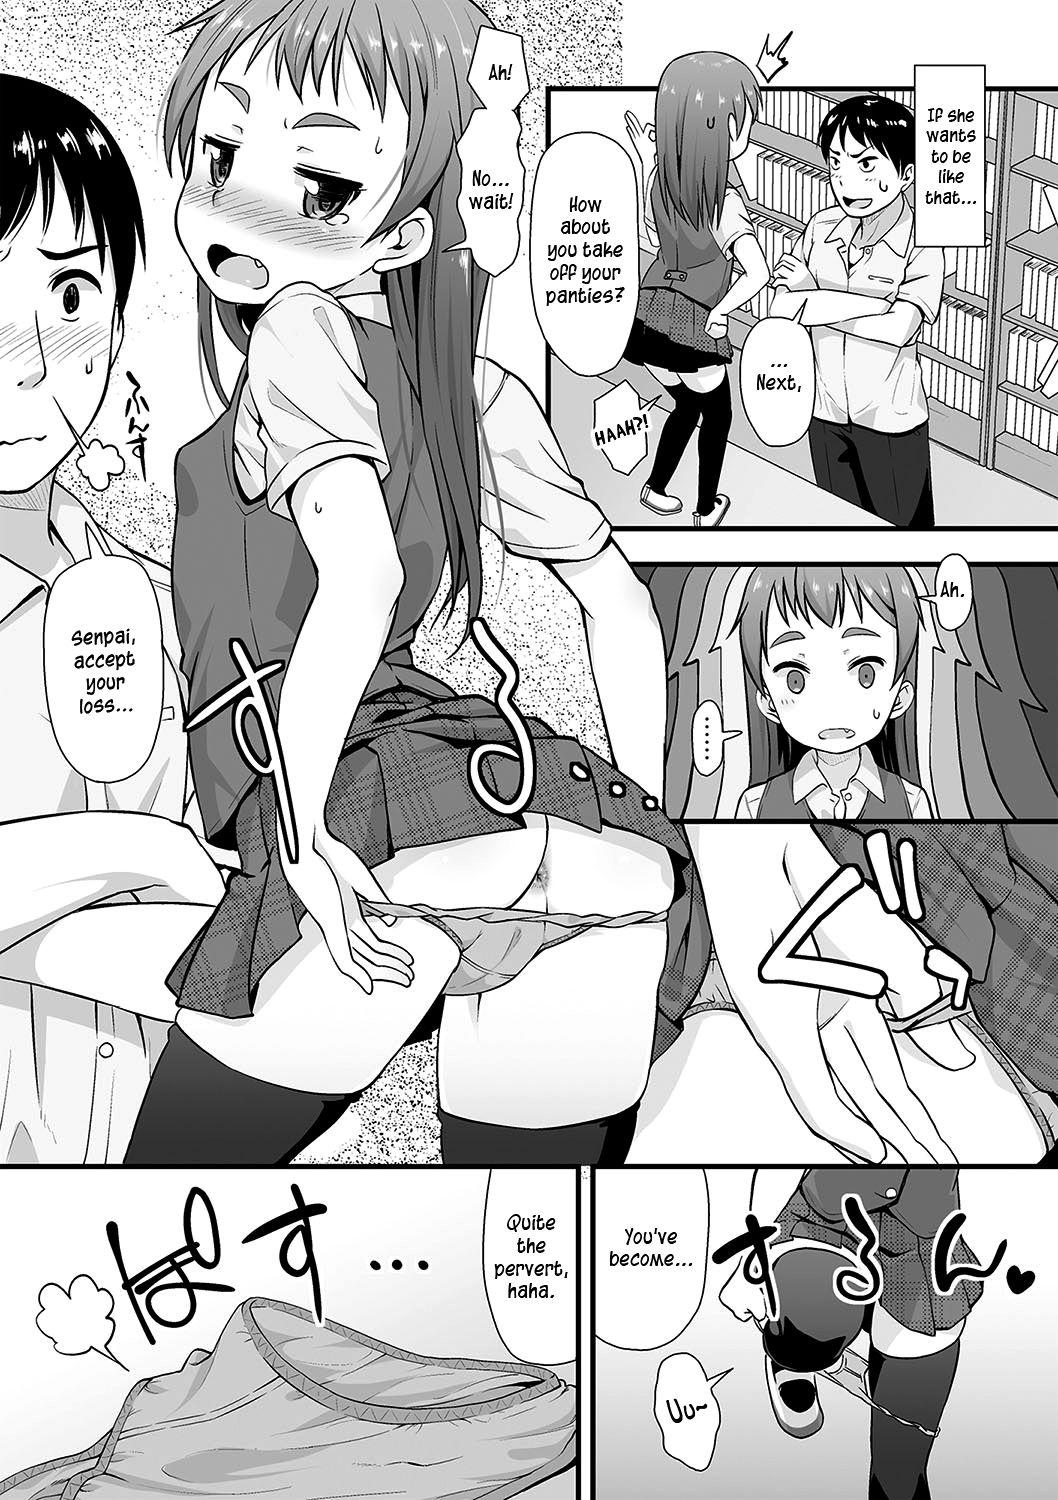 Manga Club Activity Log 5